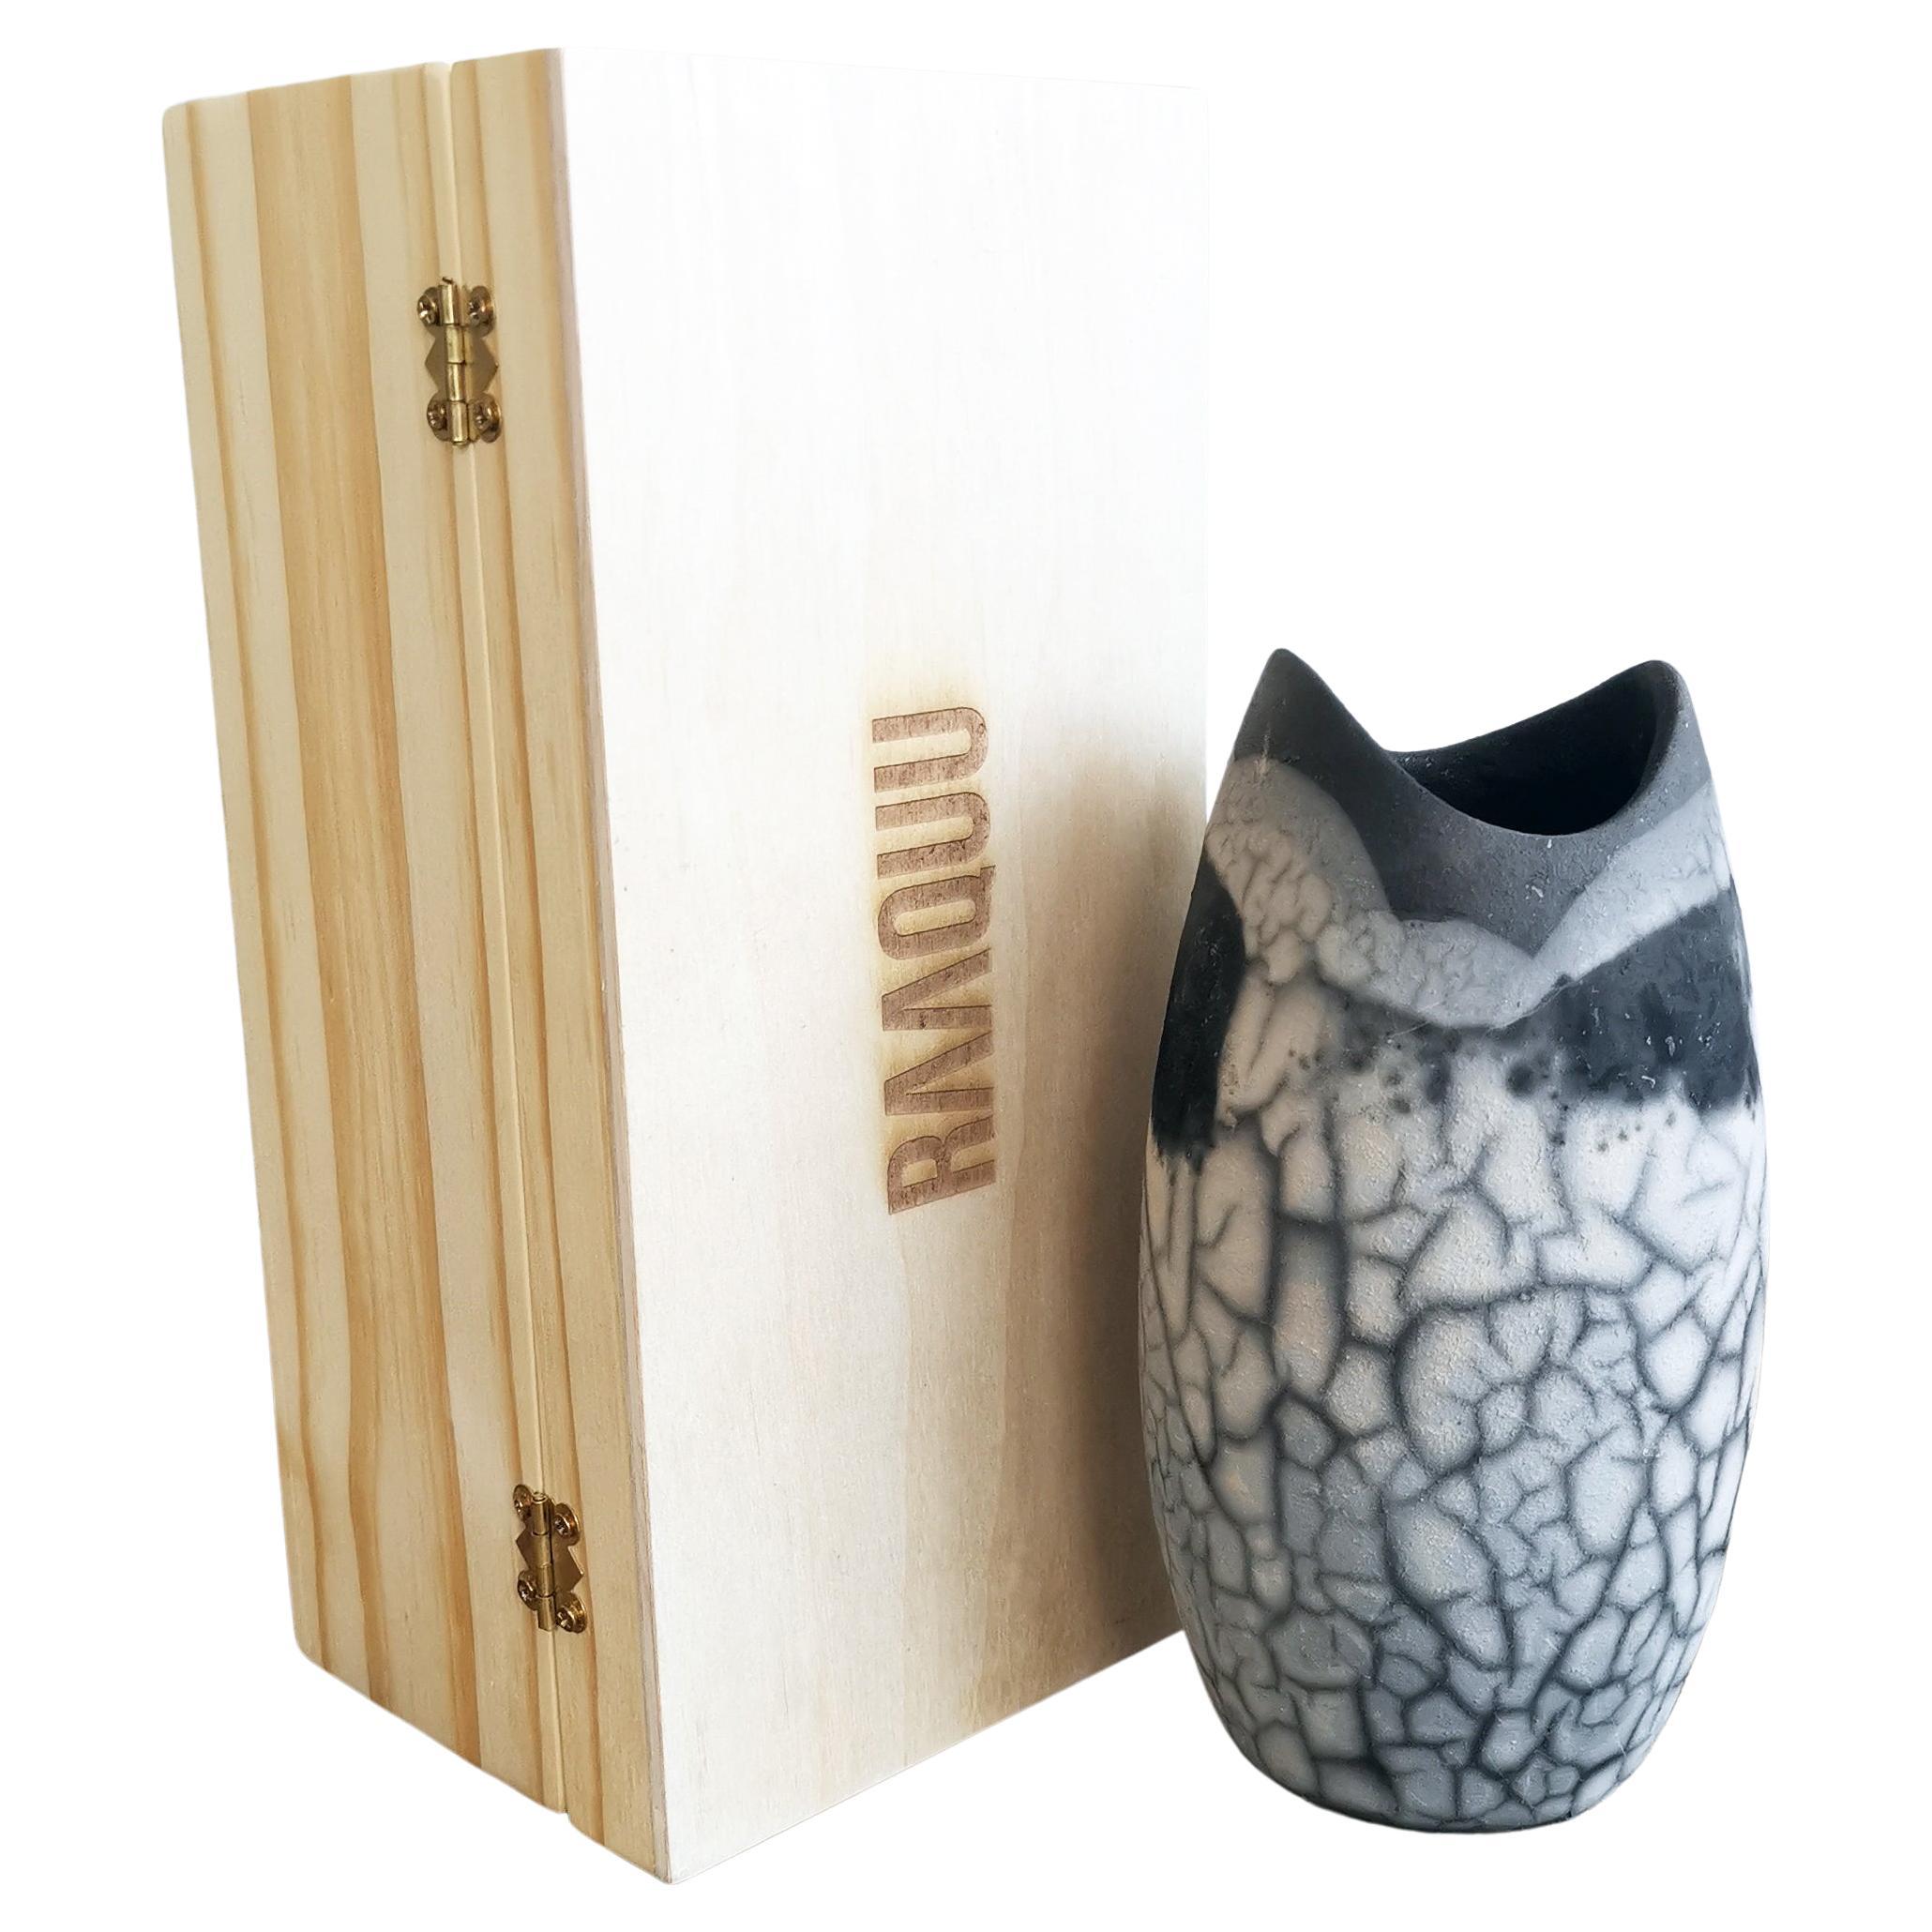 Koi Raku Keramik Vase mit Geschenkbox - Geräuchertes Raku - Handgemachte Keramik